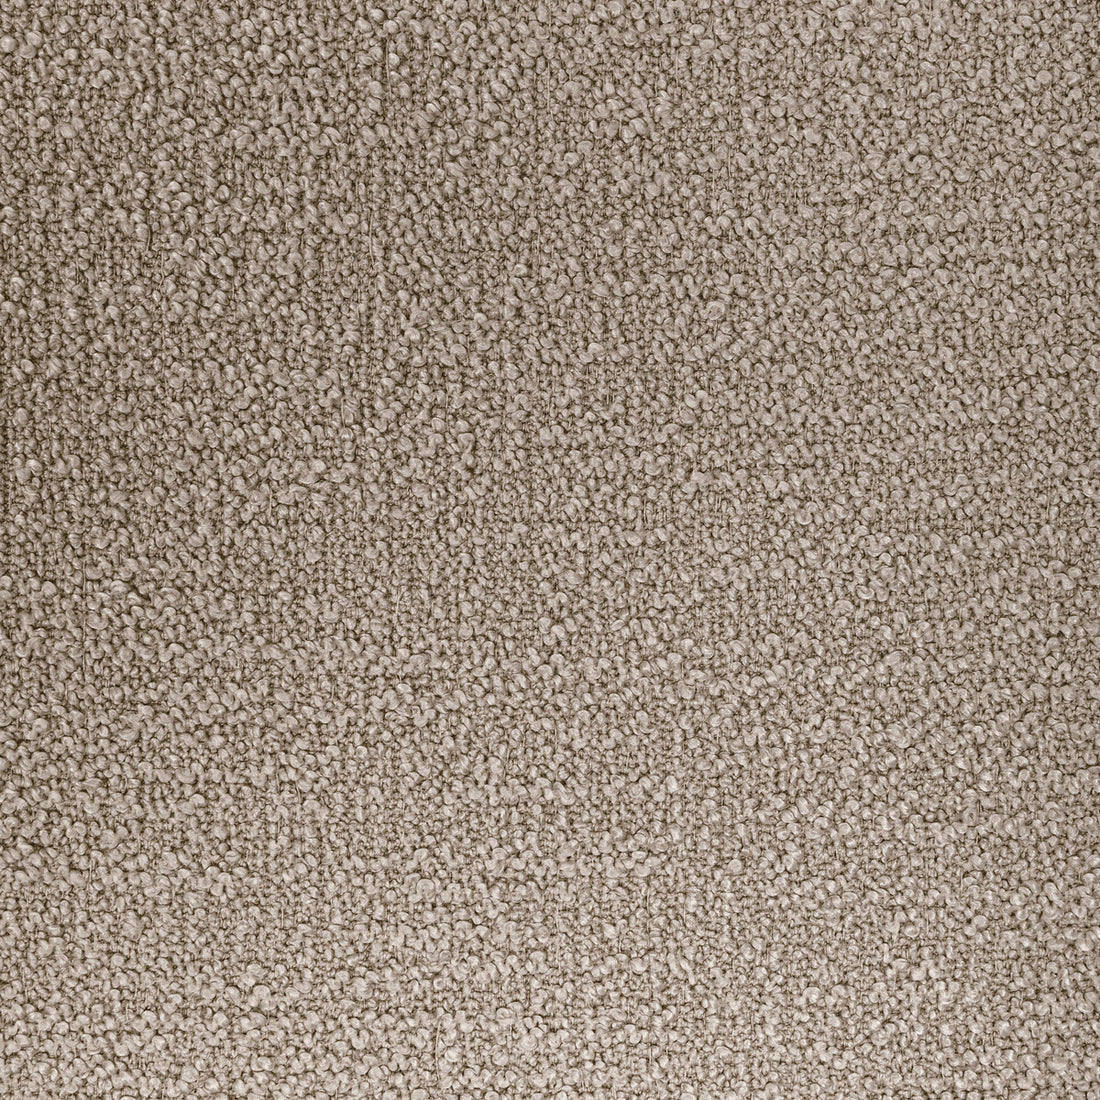 Kravet Smart fabric in 36857-106 color - pattern 36857.106.0 - by Kravet Smart in the Performance Kravetarmor collection